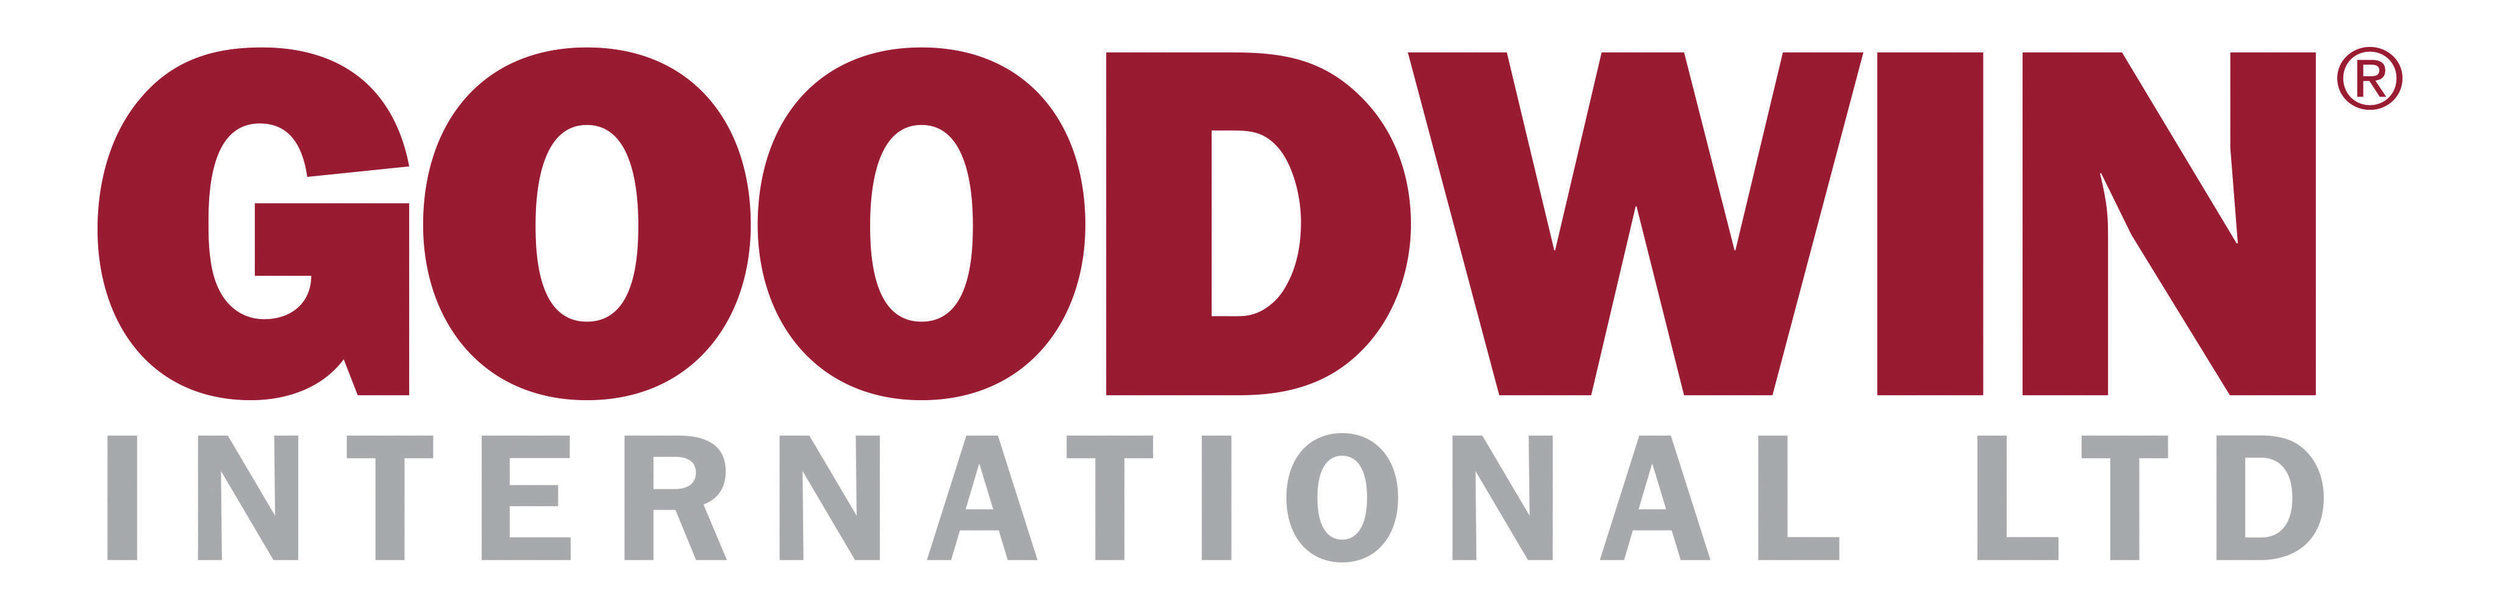 Goodwin-International-Ltd-Logo-RGB_1.jpg